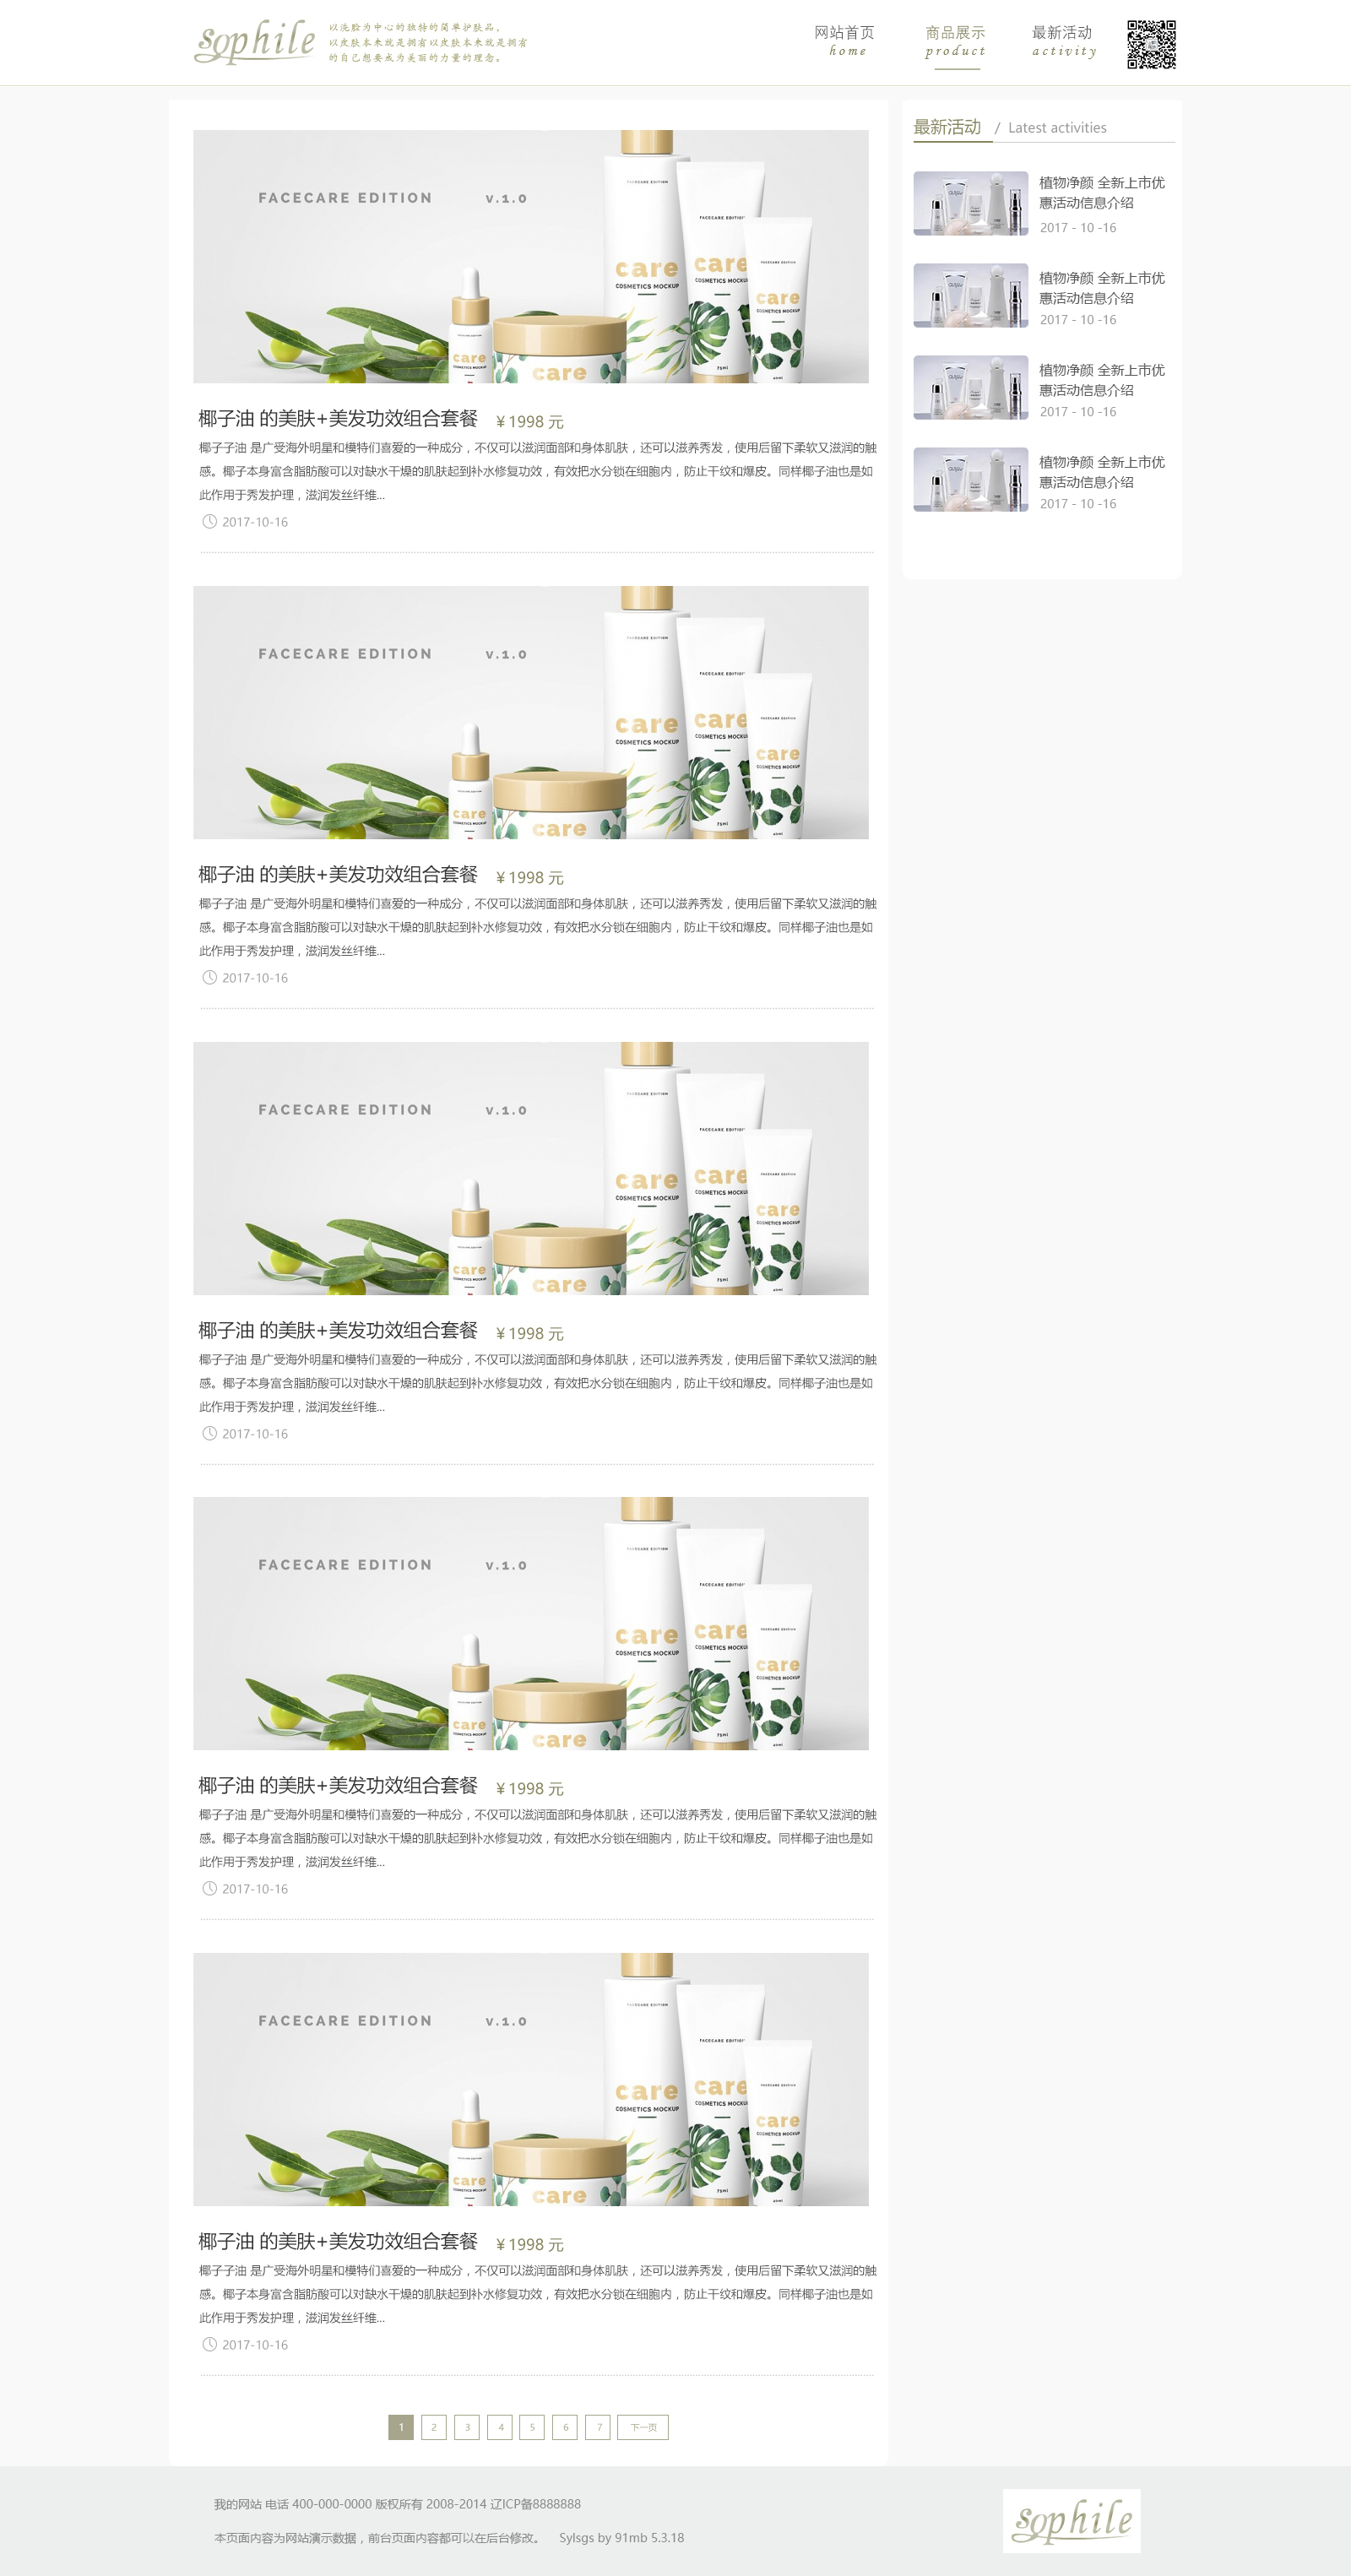 日本sophile化妆品网站_效果图2